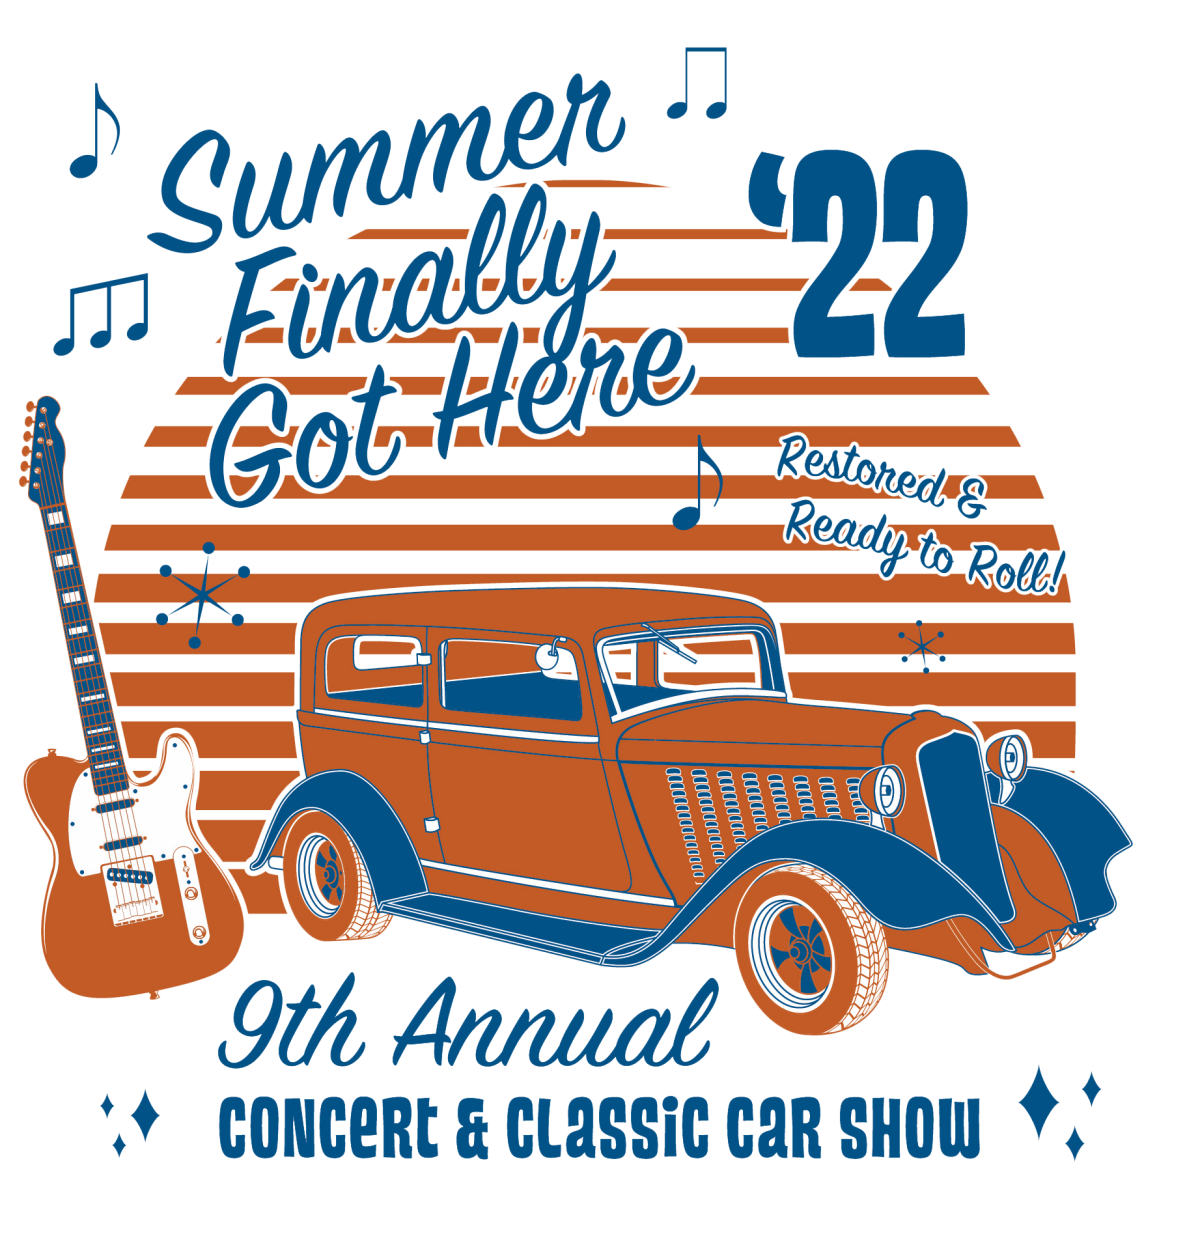 9th Annual Summer Finally Got Here Concert & Classic Car Show